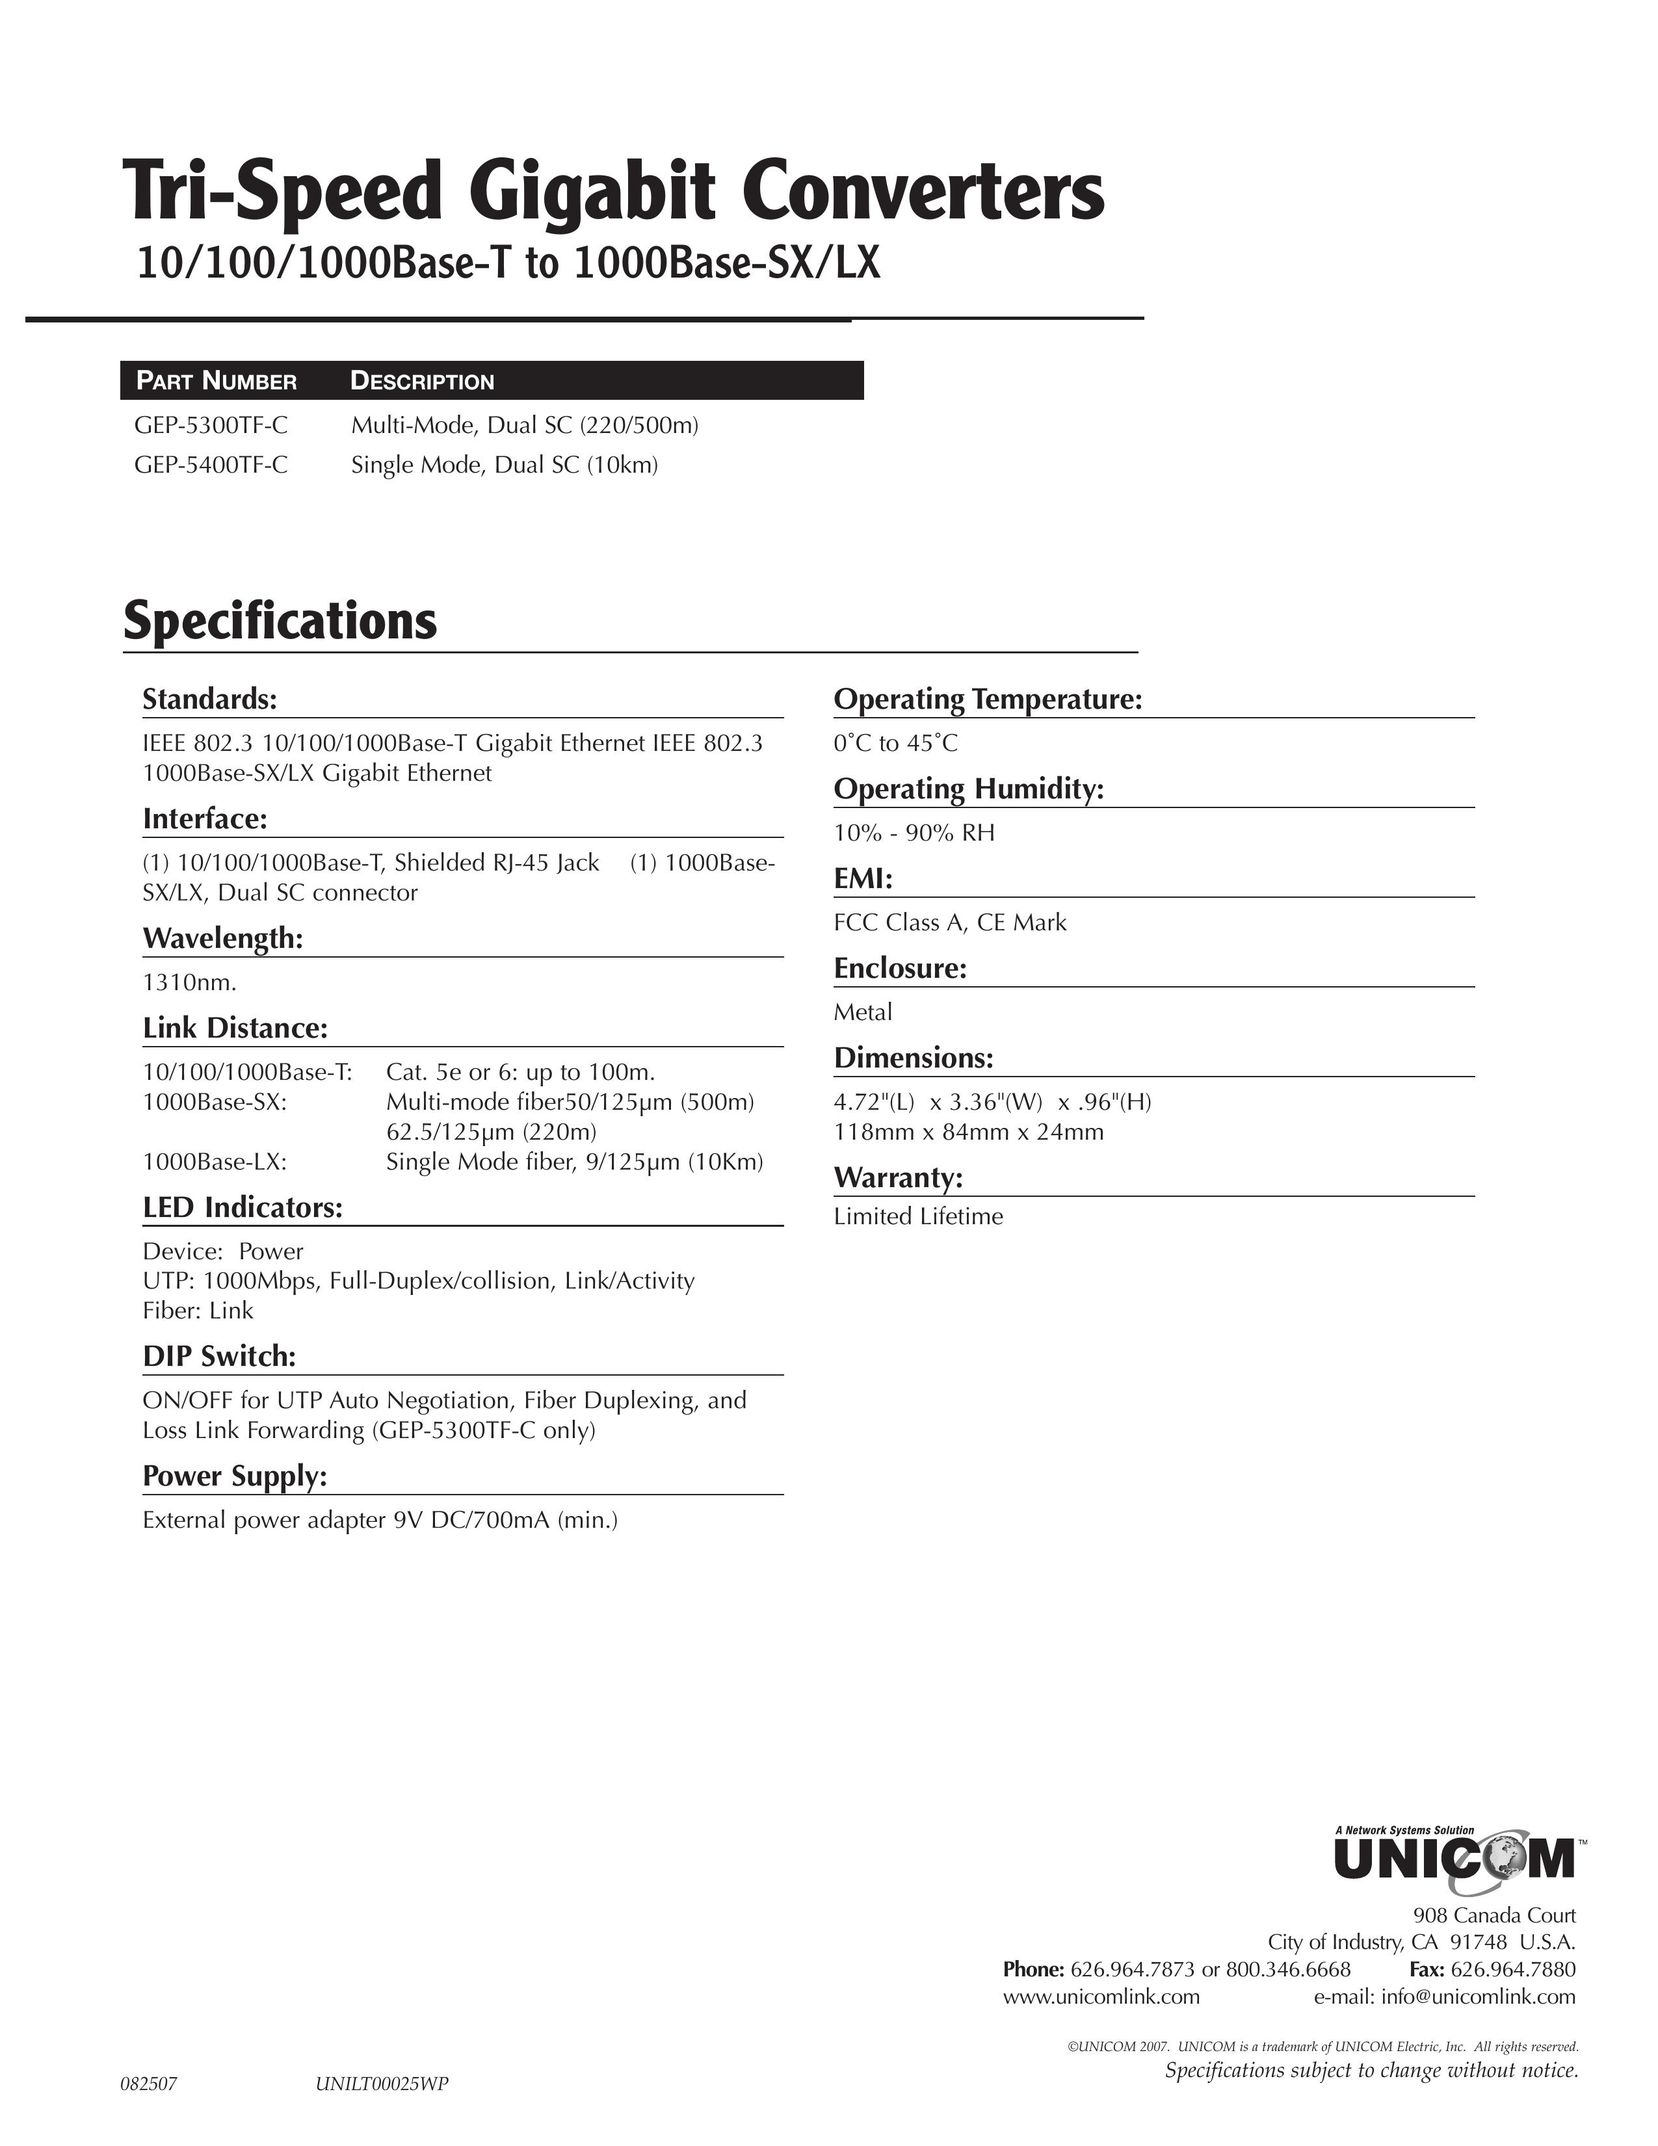 UNICOM Electric GEP-5300TF-C Network Card User Manual